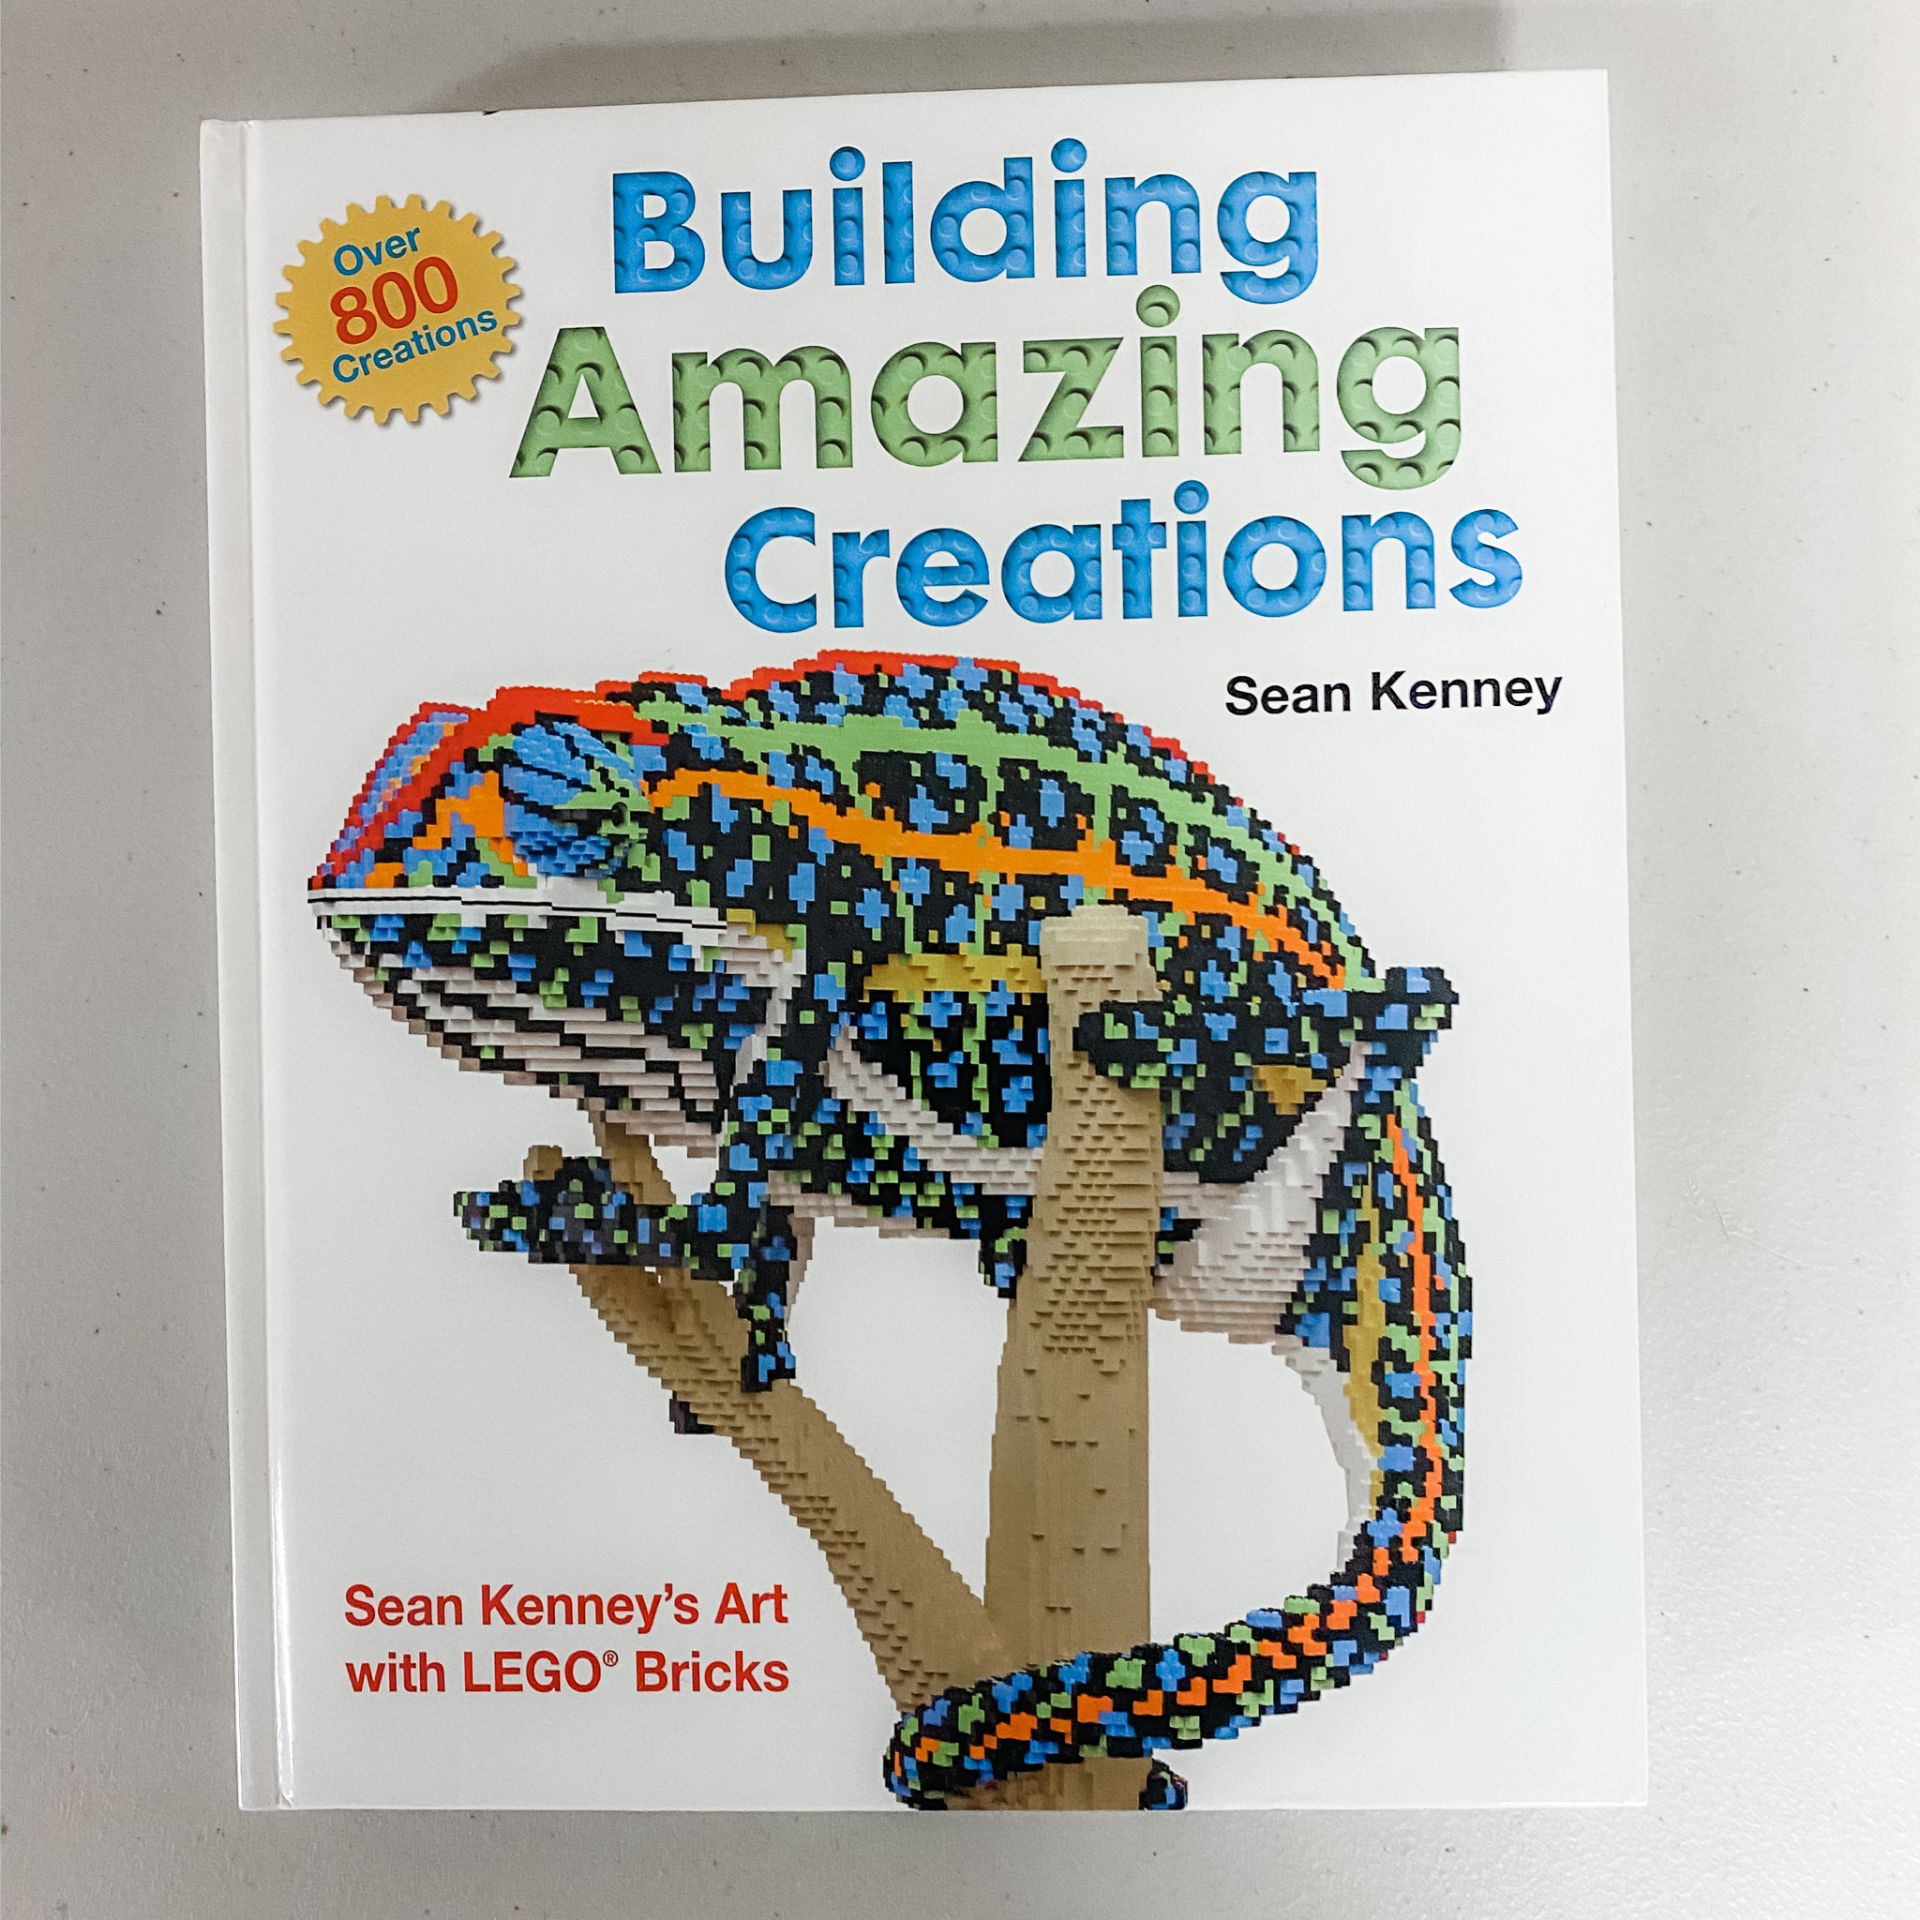 x1 lego creations book - "Building Amazing Creatoins" with Lego Bricks - Shepherd's Fold